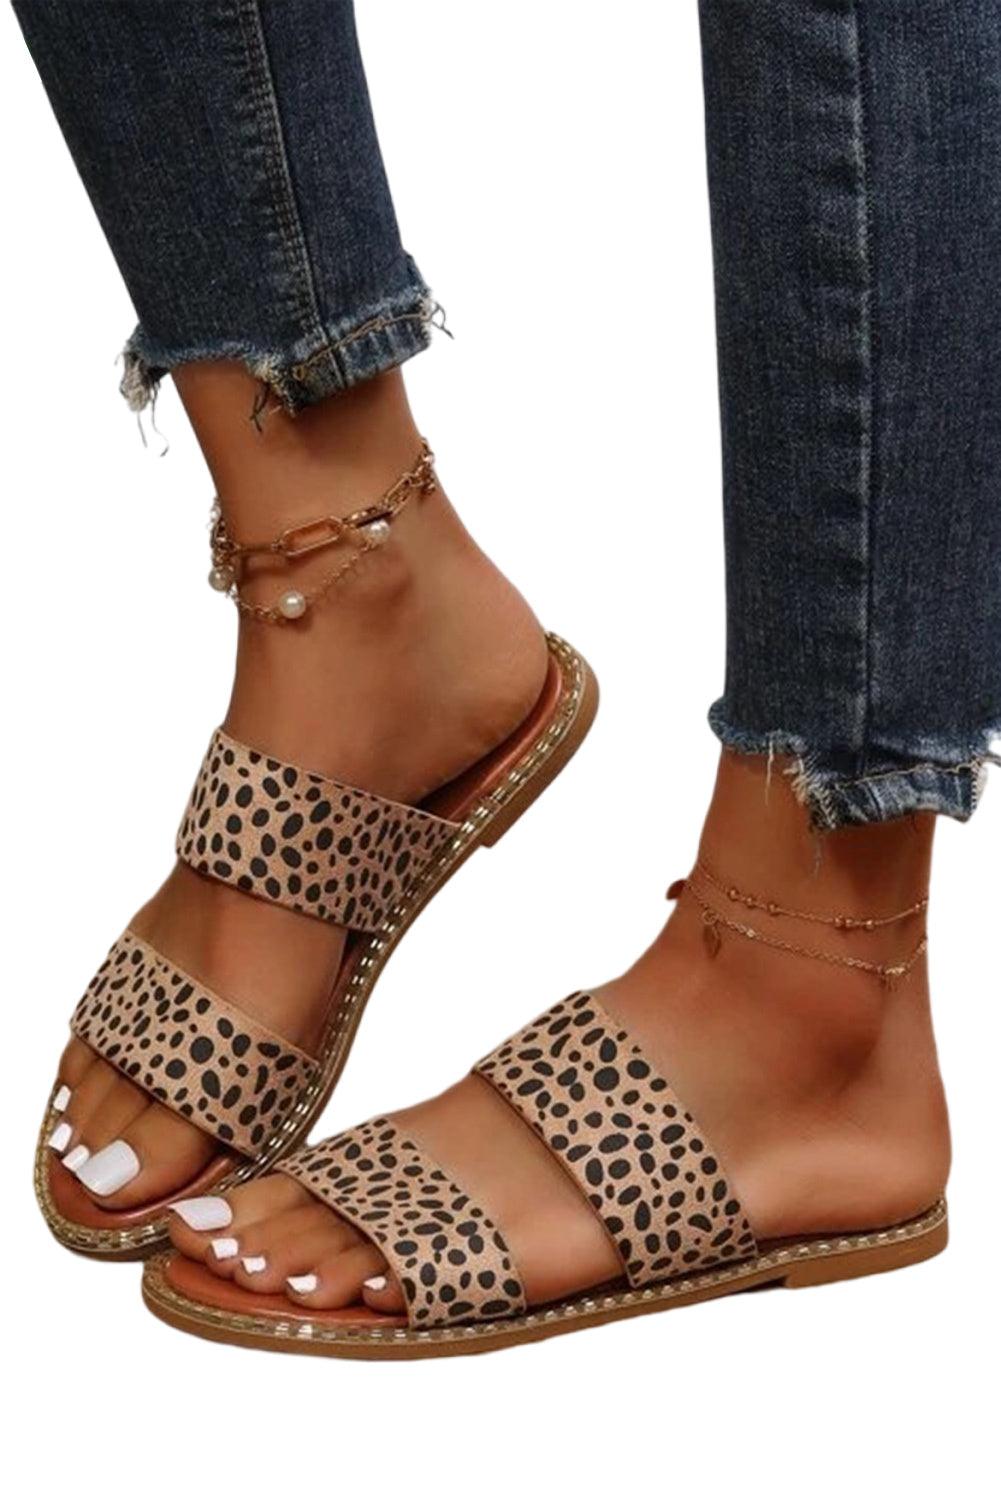 Women's Shoes - Sandals Leopard Double Straps Flat Slippers